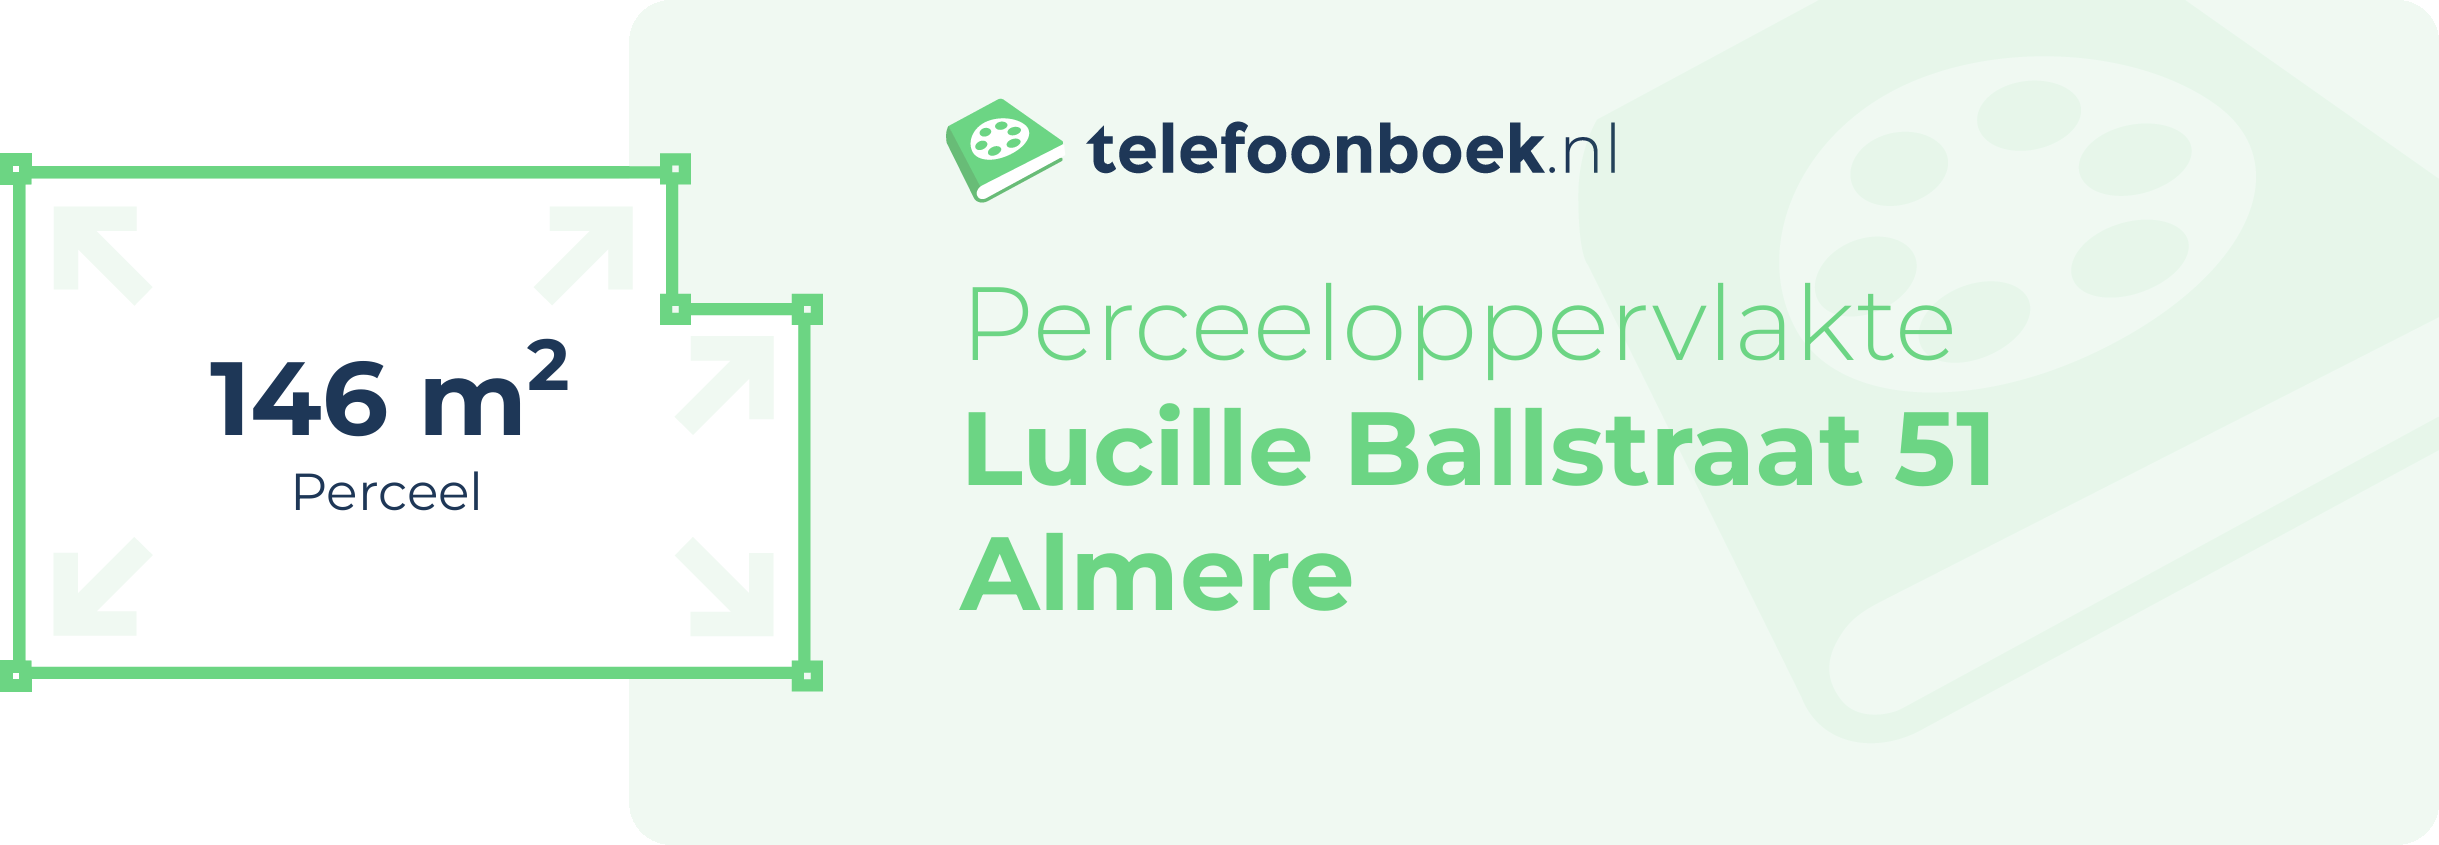 Perceeloppervlakte Lucille Ballstraat 51 Almere